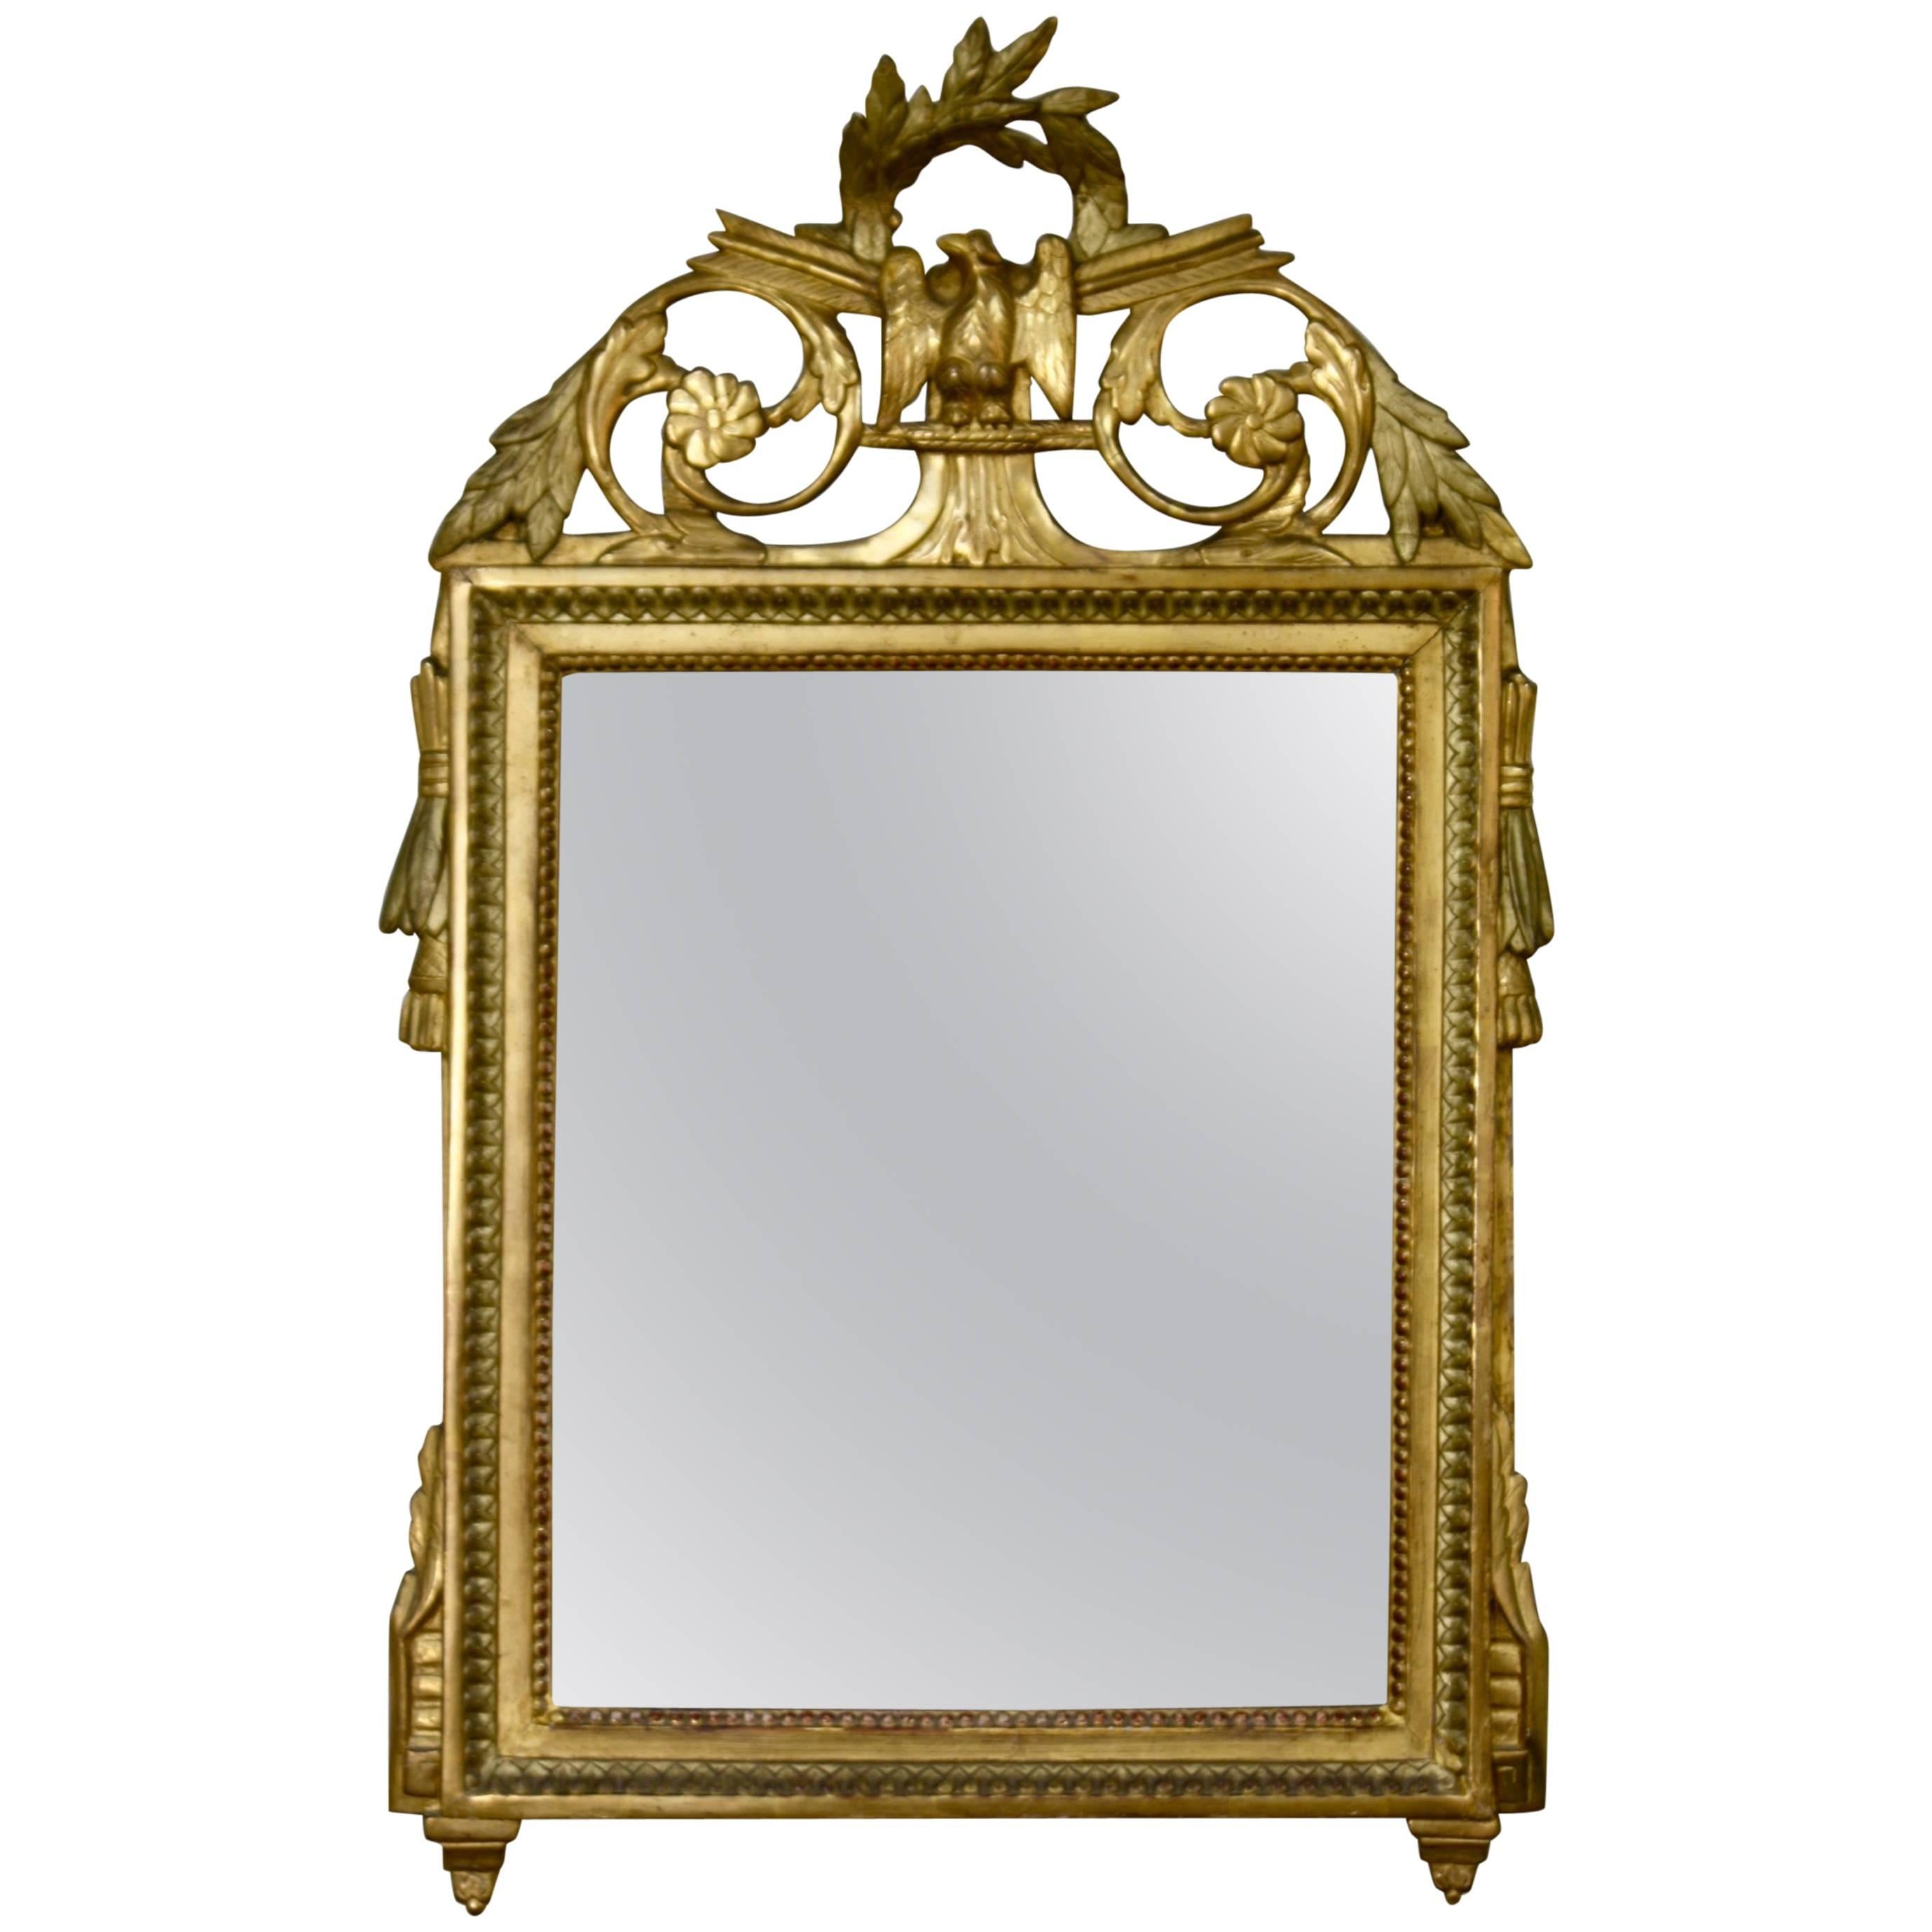 Louis XVI Period Trumeau Mirror with Eagle